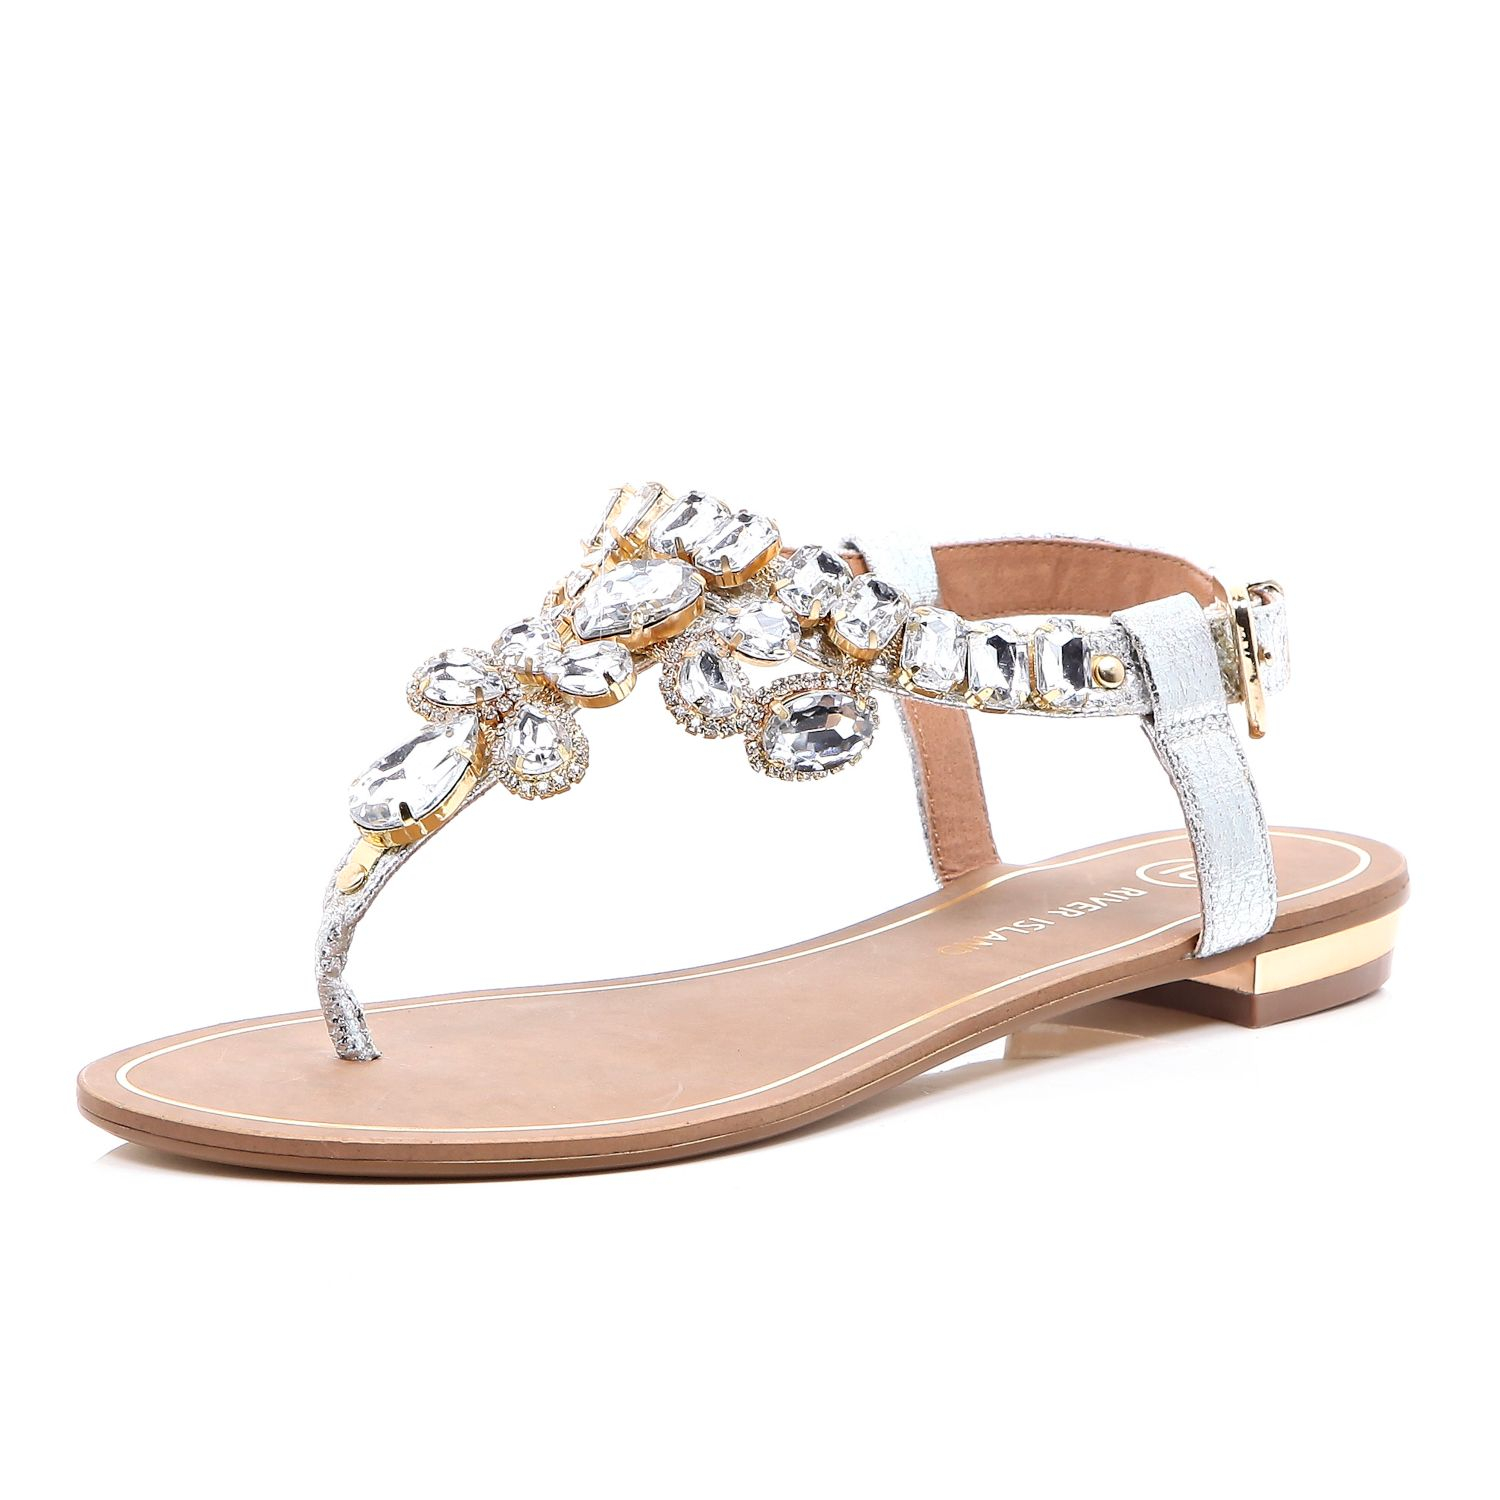 River Island Silver Gemstone Embellished Sandals in Metallic - Lyst